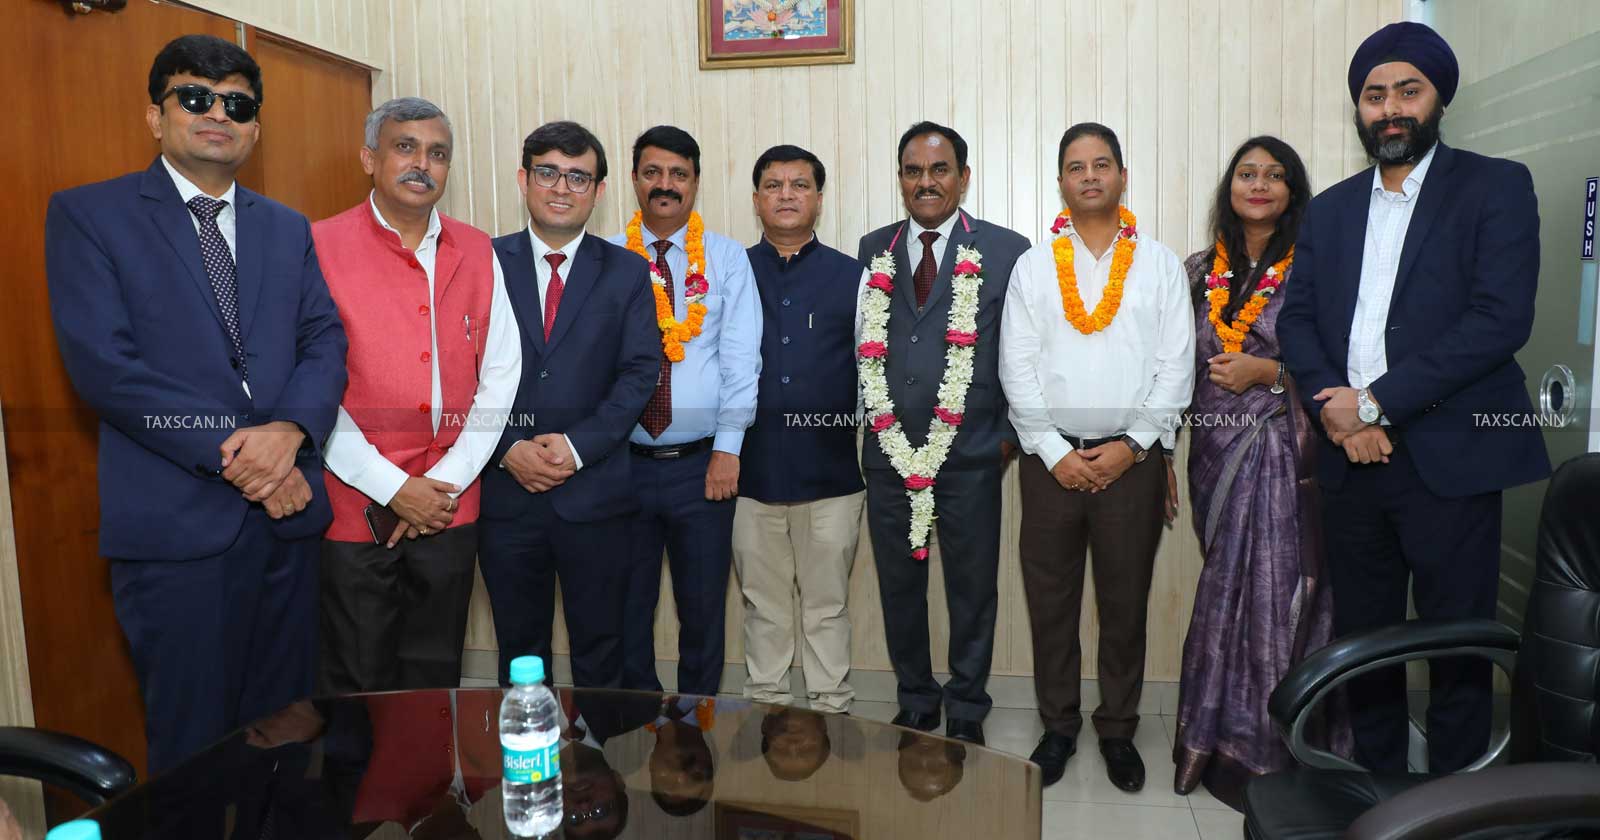 Northern India Regional Council - ICMAI - Northern Region Chapters Meet Haridwar - icmai host meet in haridwar - TAXSCAN